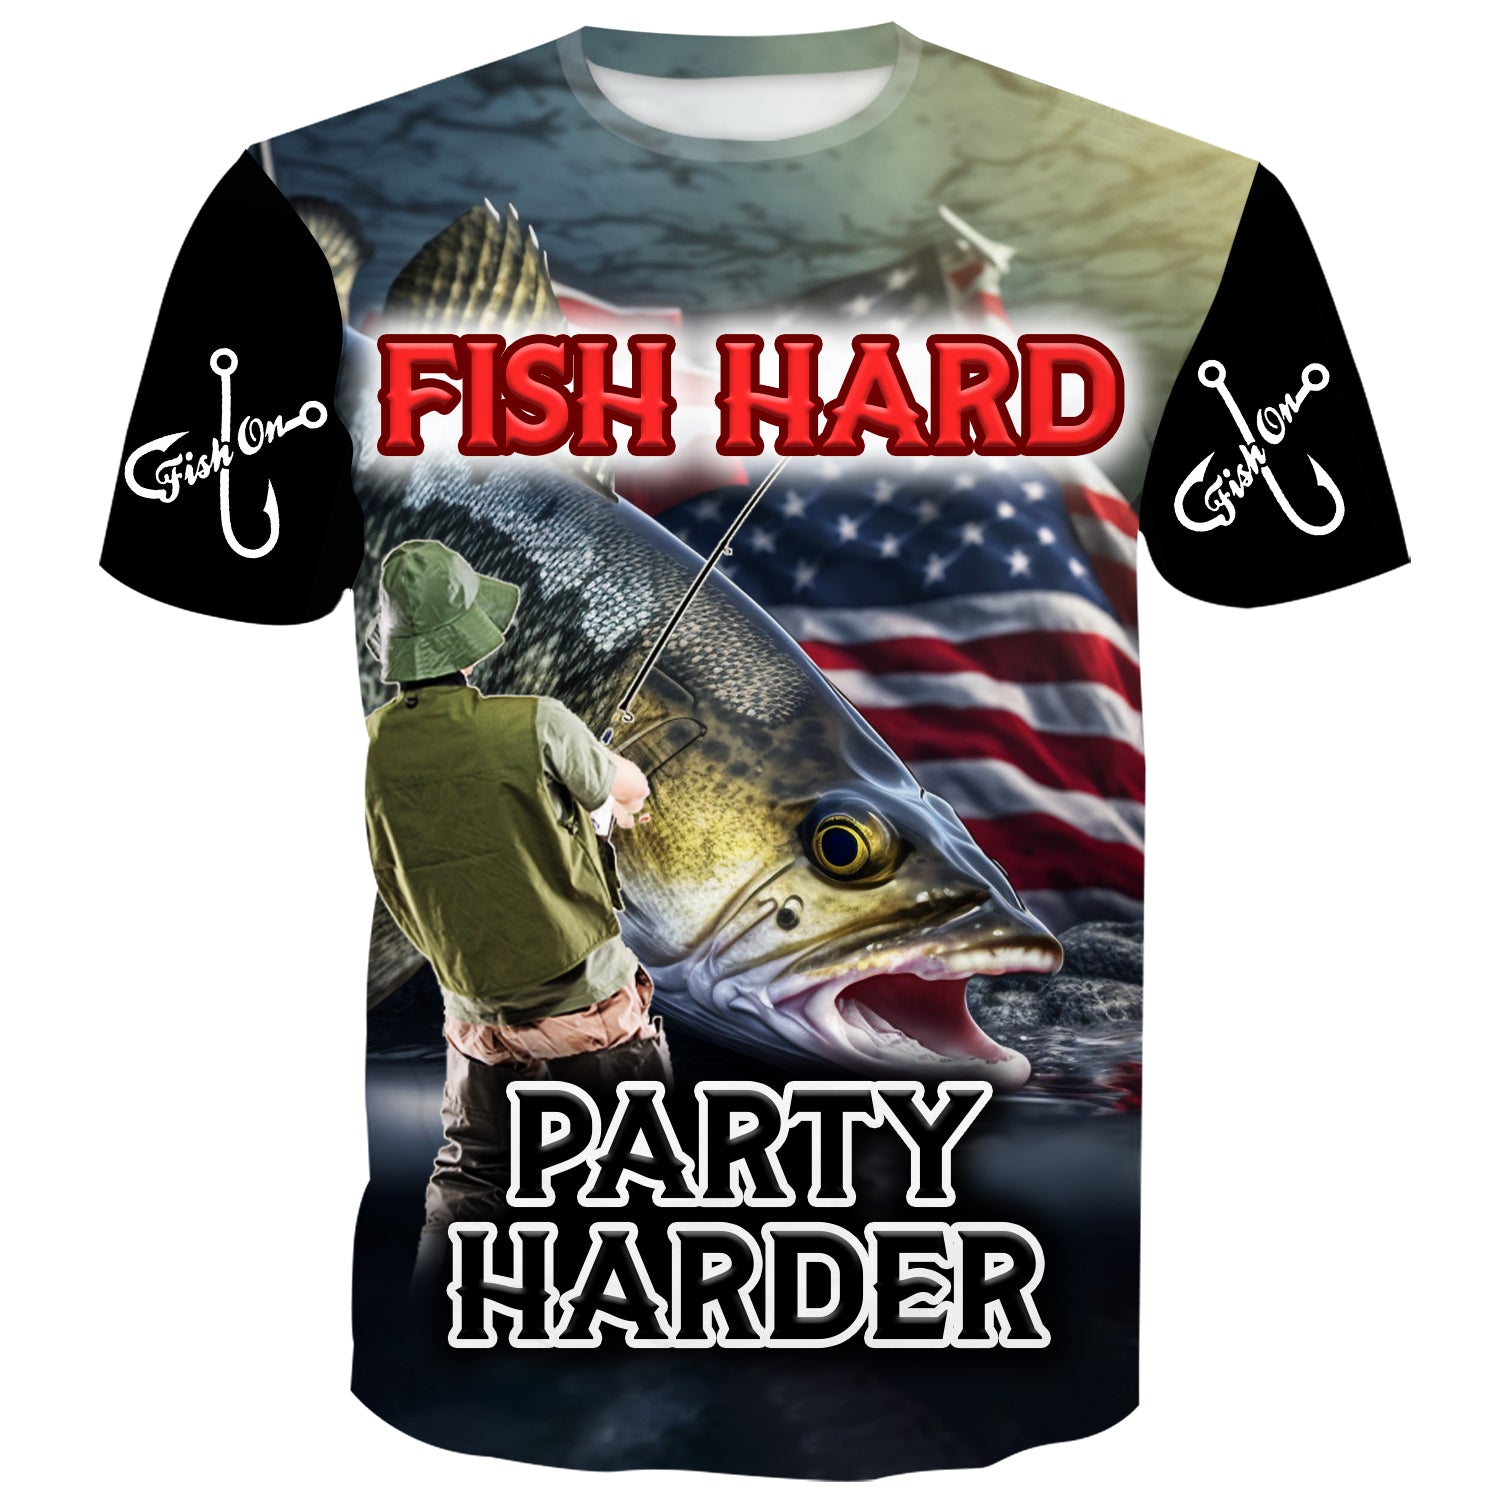 Fish Hard, Party Harder - T-Shirt